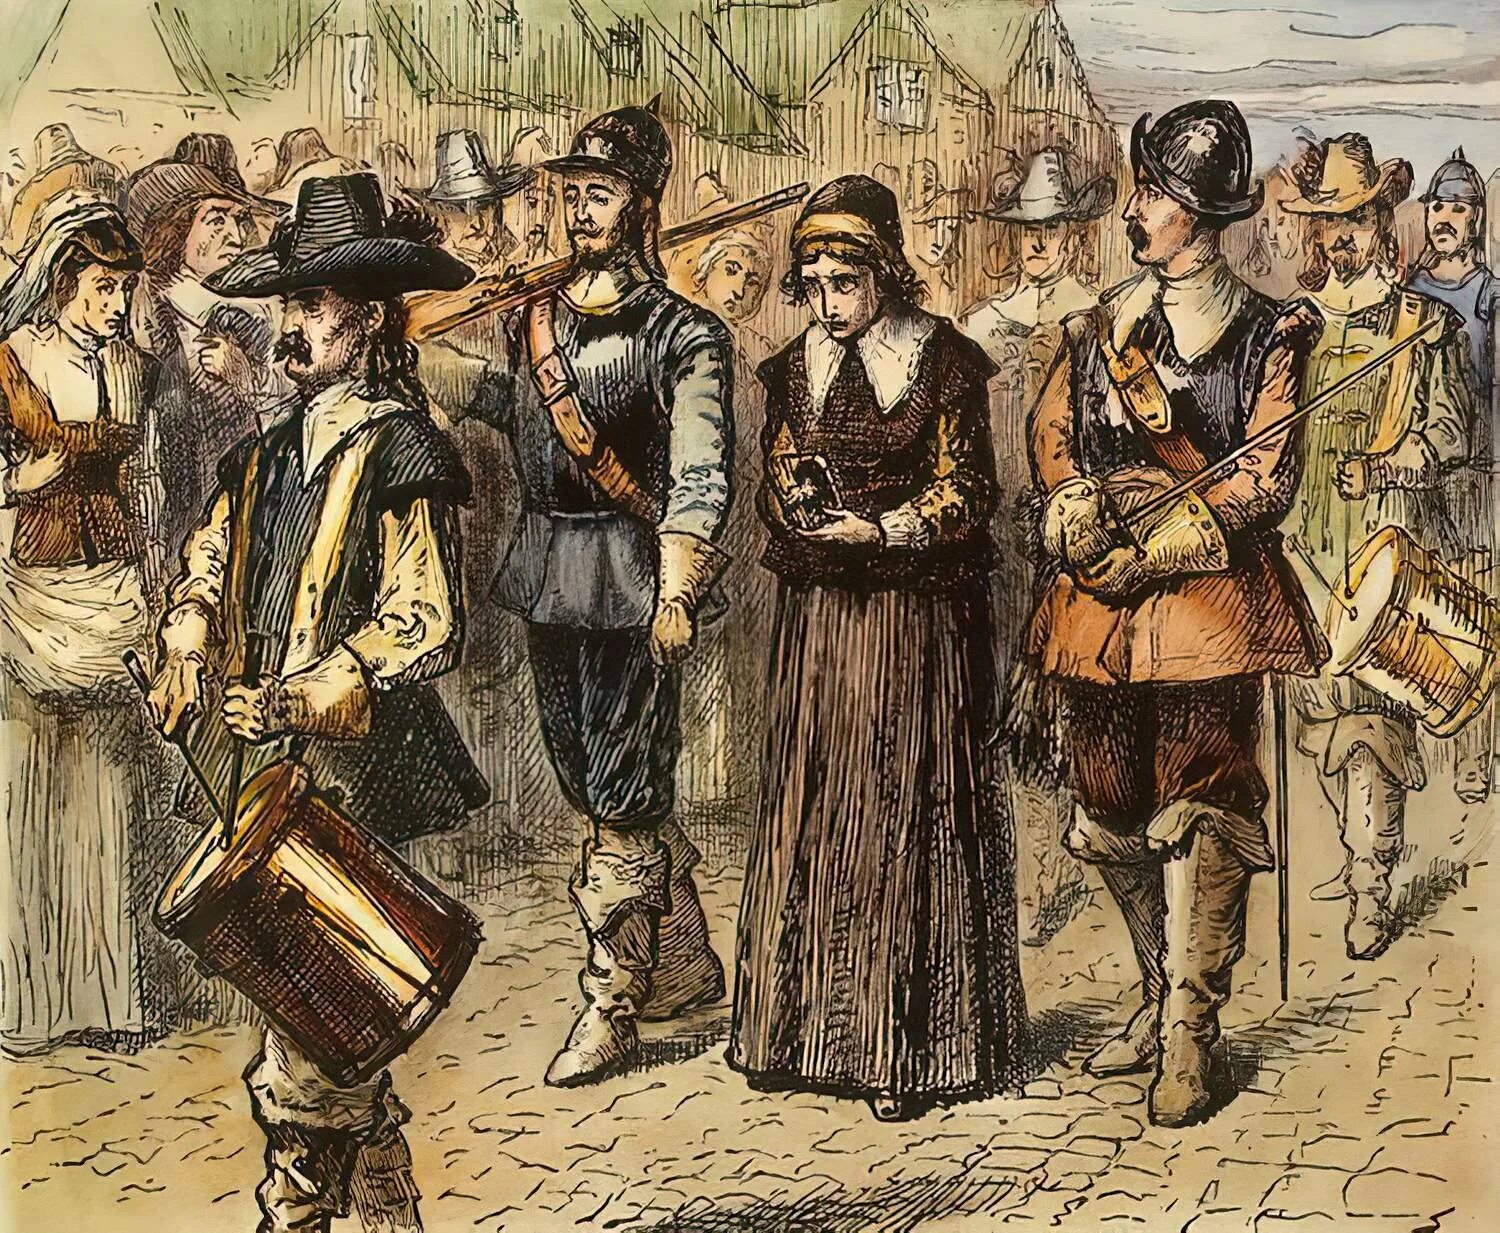 Пуританство Англия 17 век. Пуритане в Англии 16-17 века. Пуритане в Англии 17 век. Пуритане в Англии 17 век одежда.